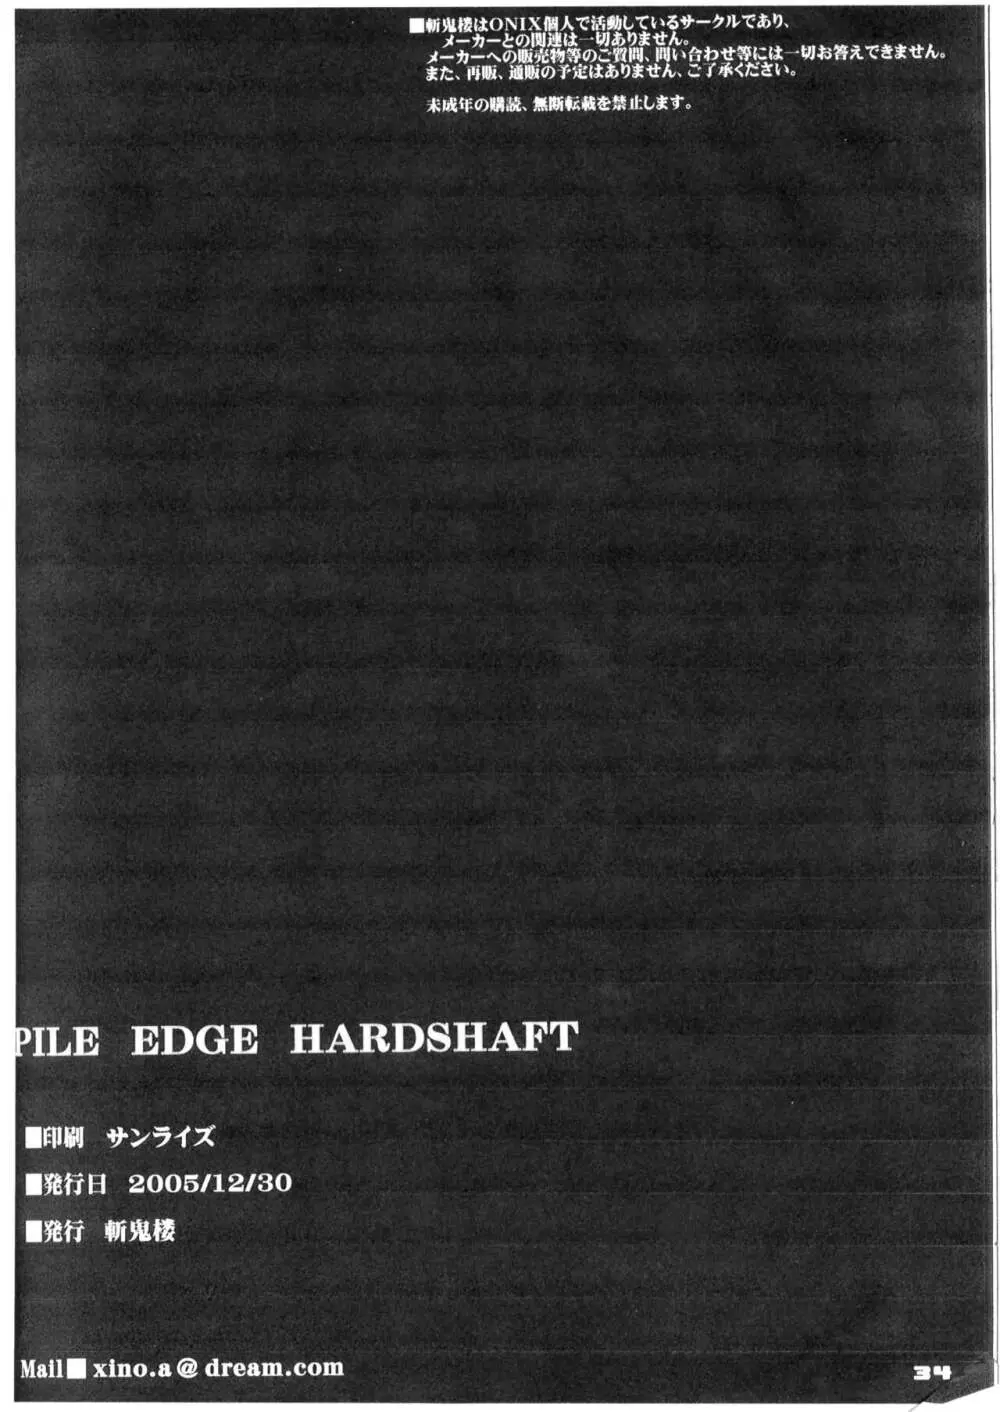 PILEEDGE HARD SHAFT 17ページ